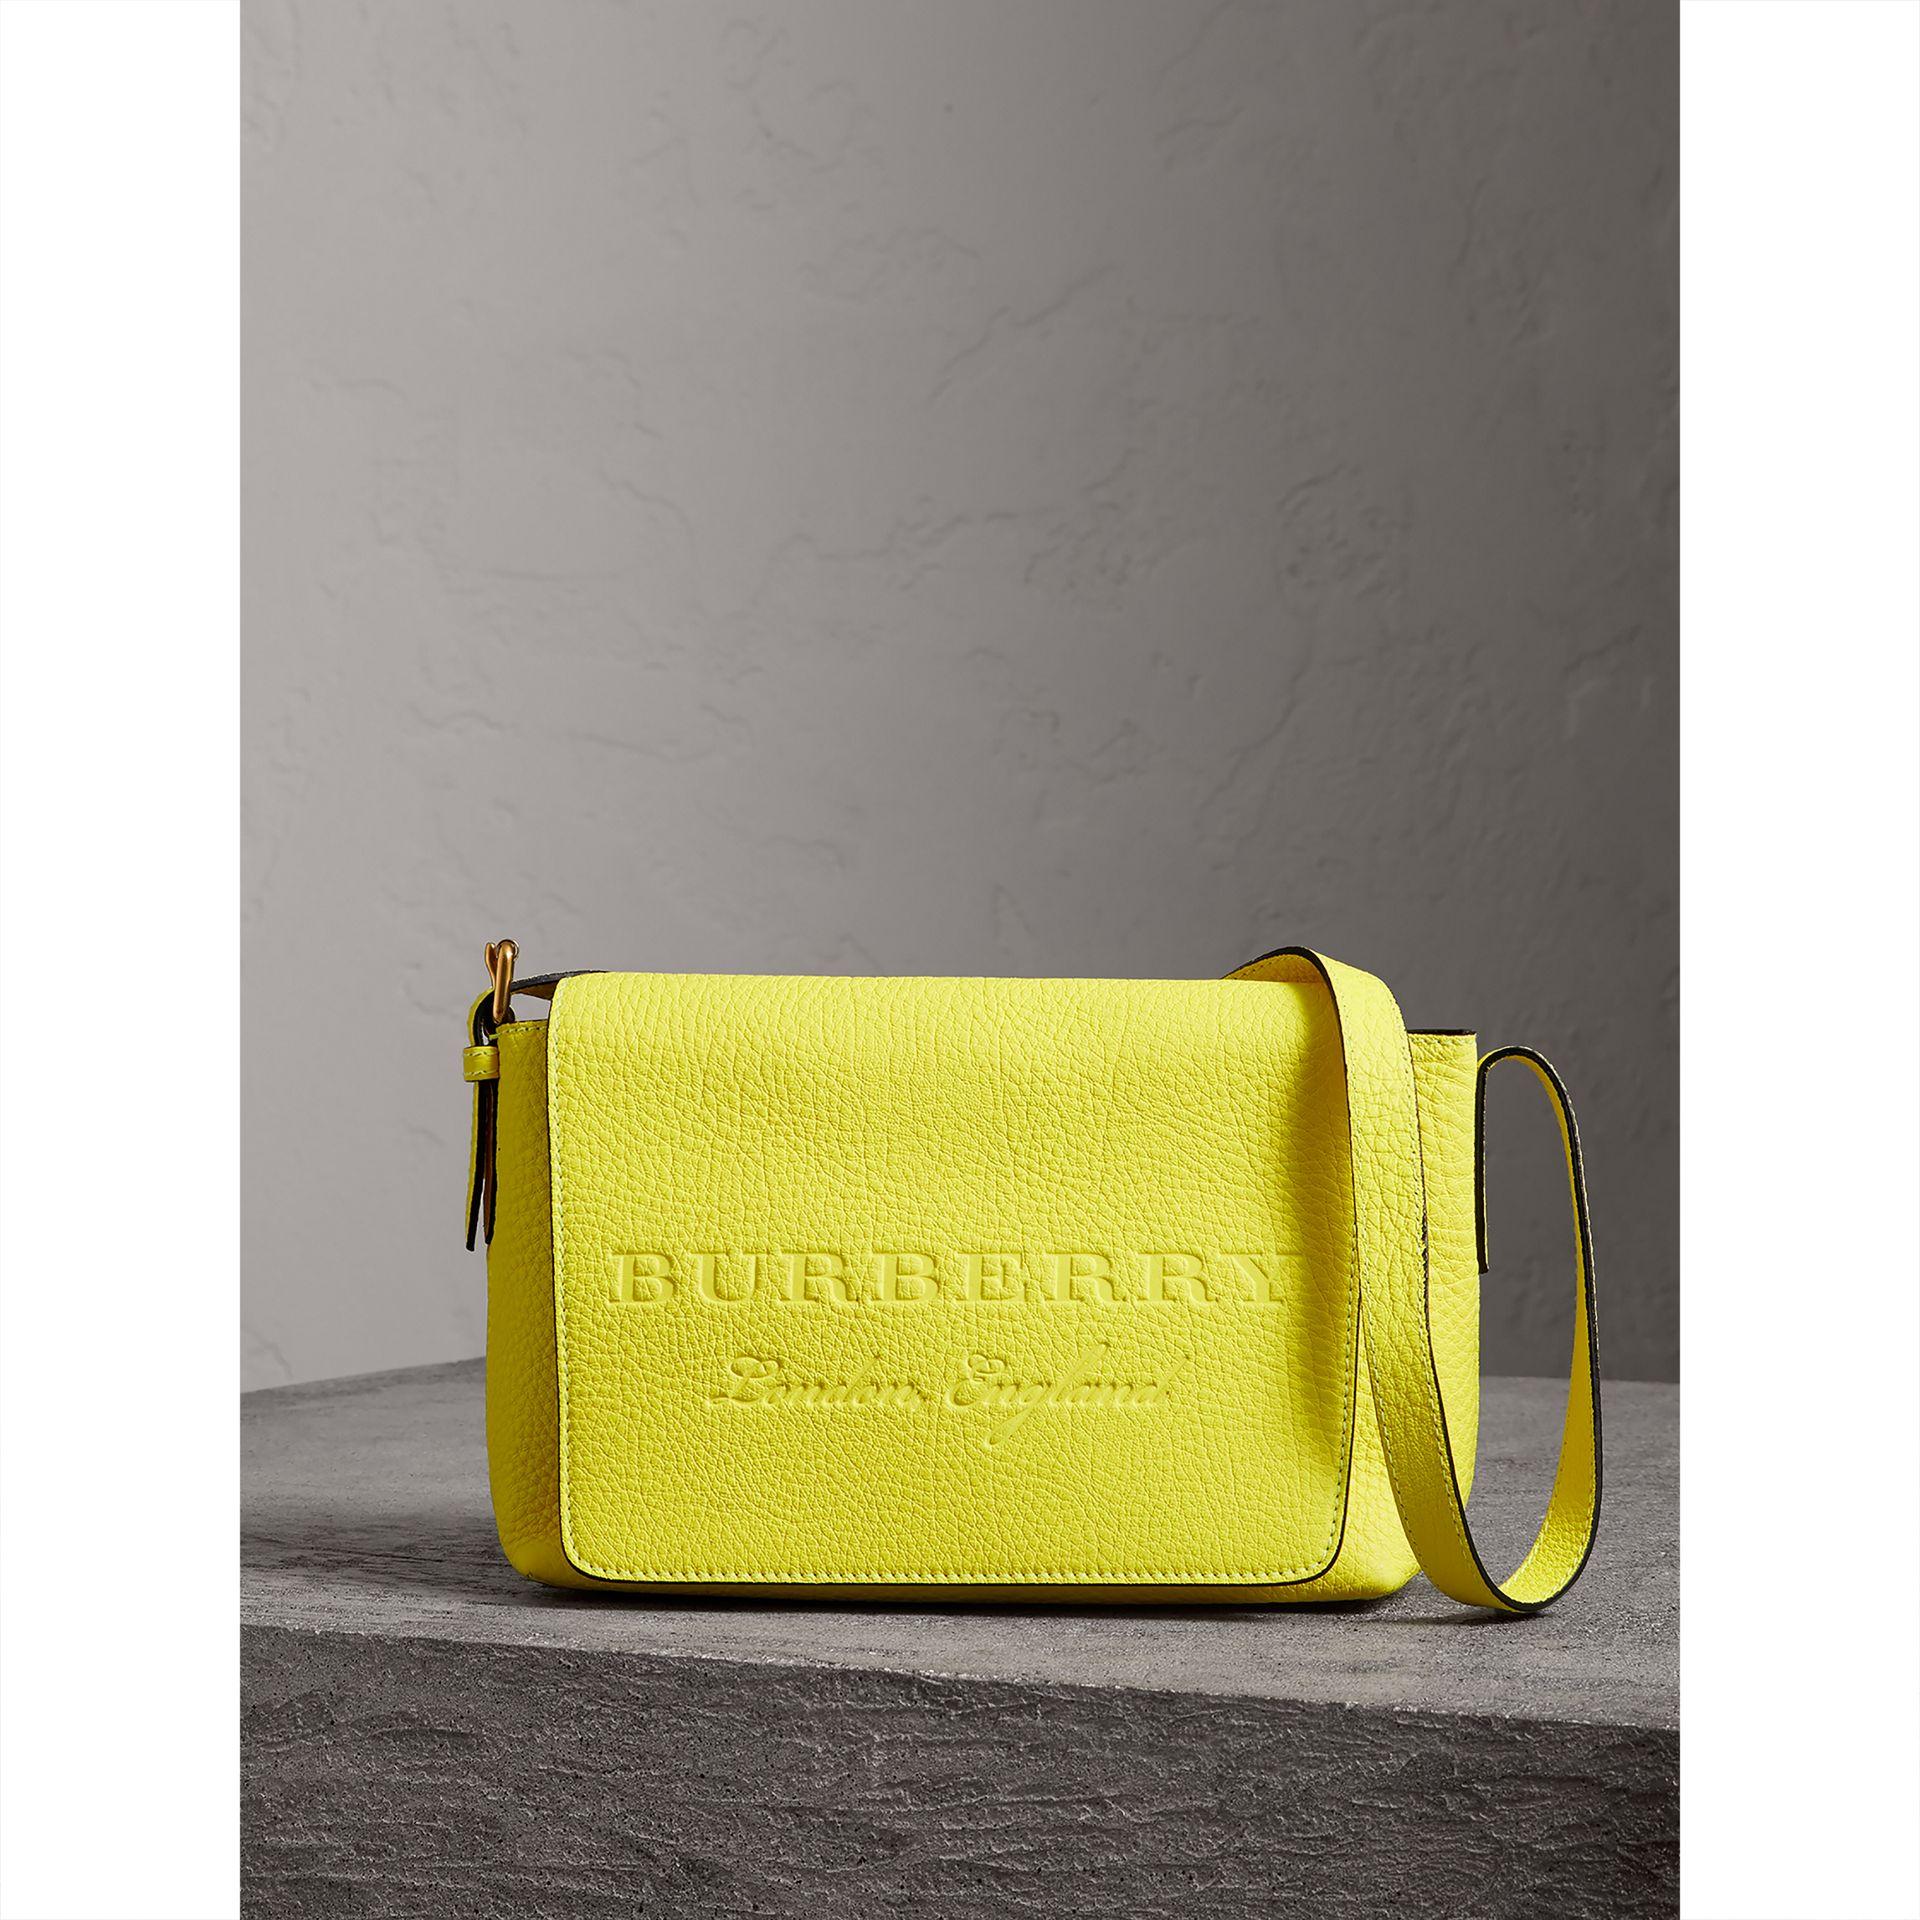 burberry yellow handbag